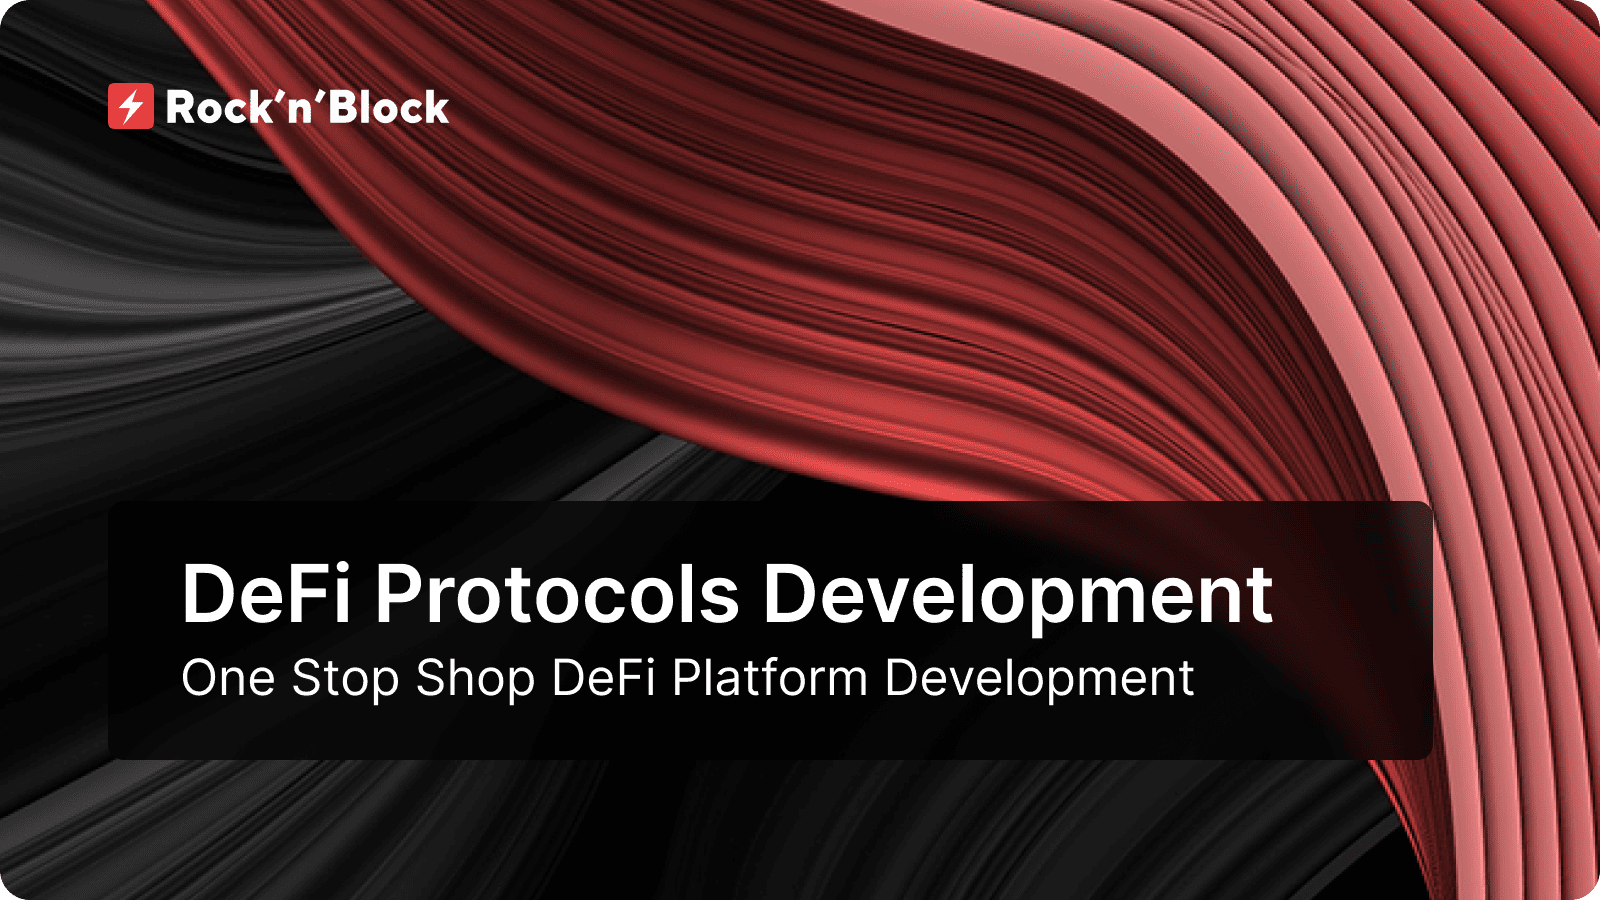 One Stop Shop DeFi Platform Development